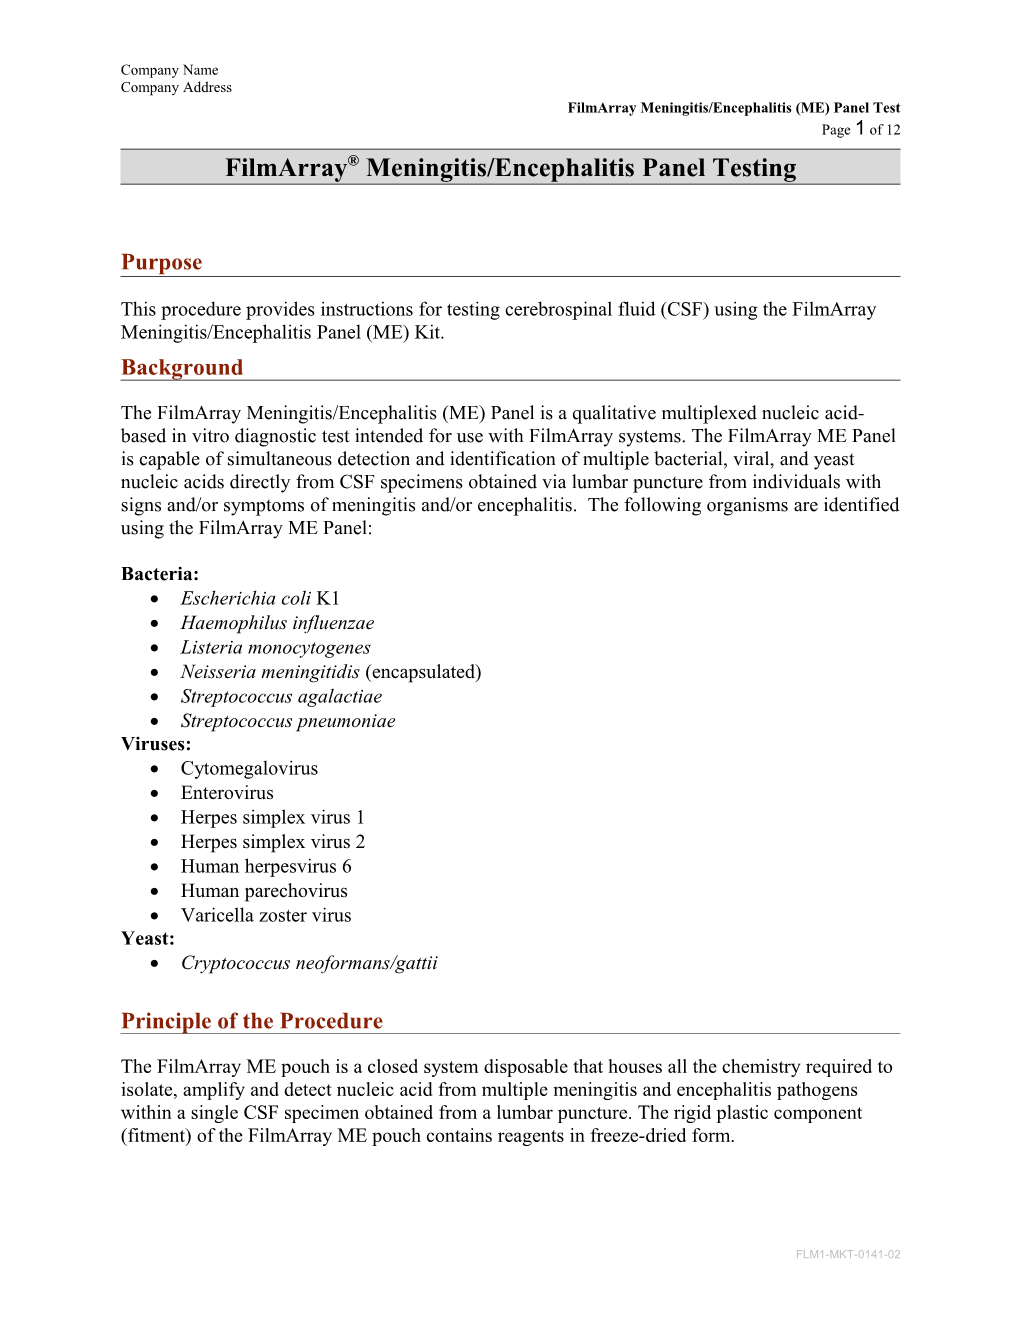 Filmarray Meningitis/Encephalitis Panel Testing